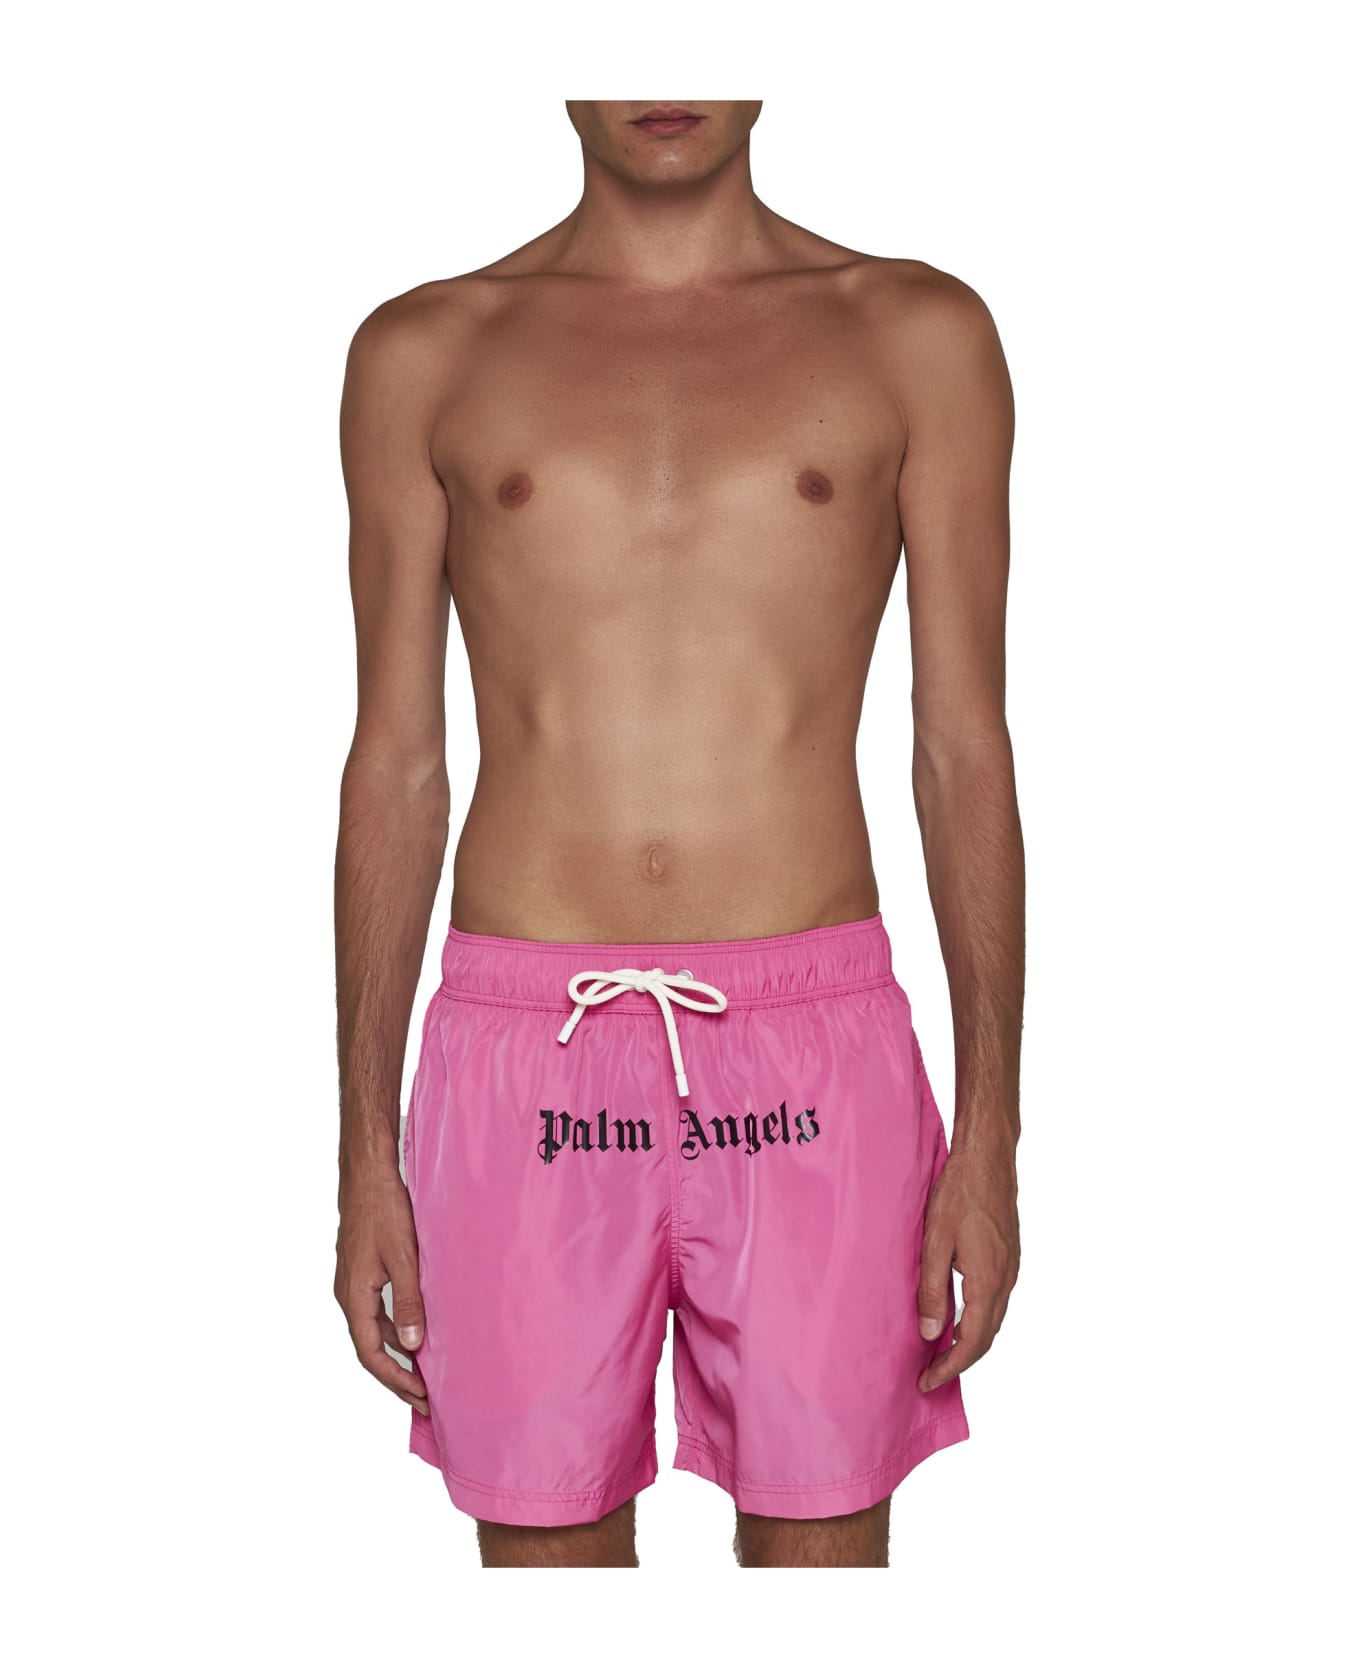 Palm Angels Swimsuit - Pink 水着